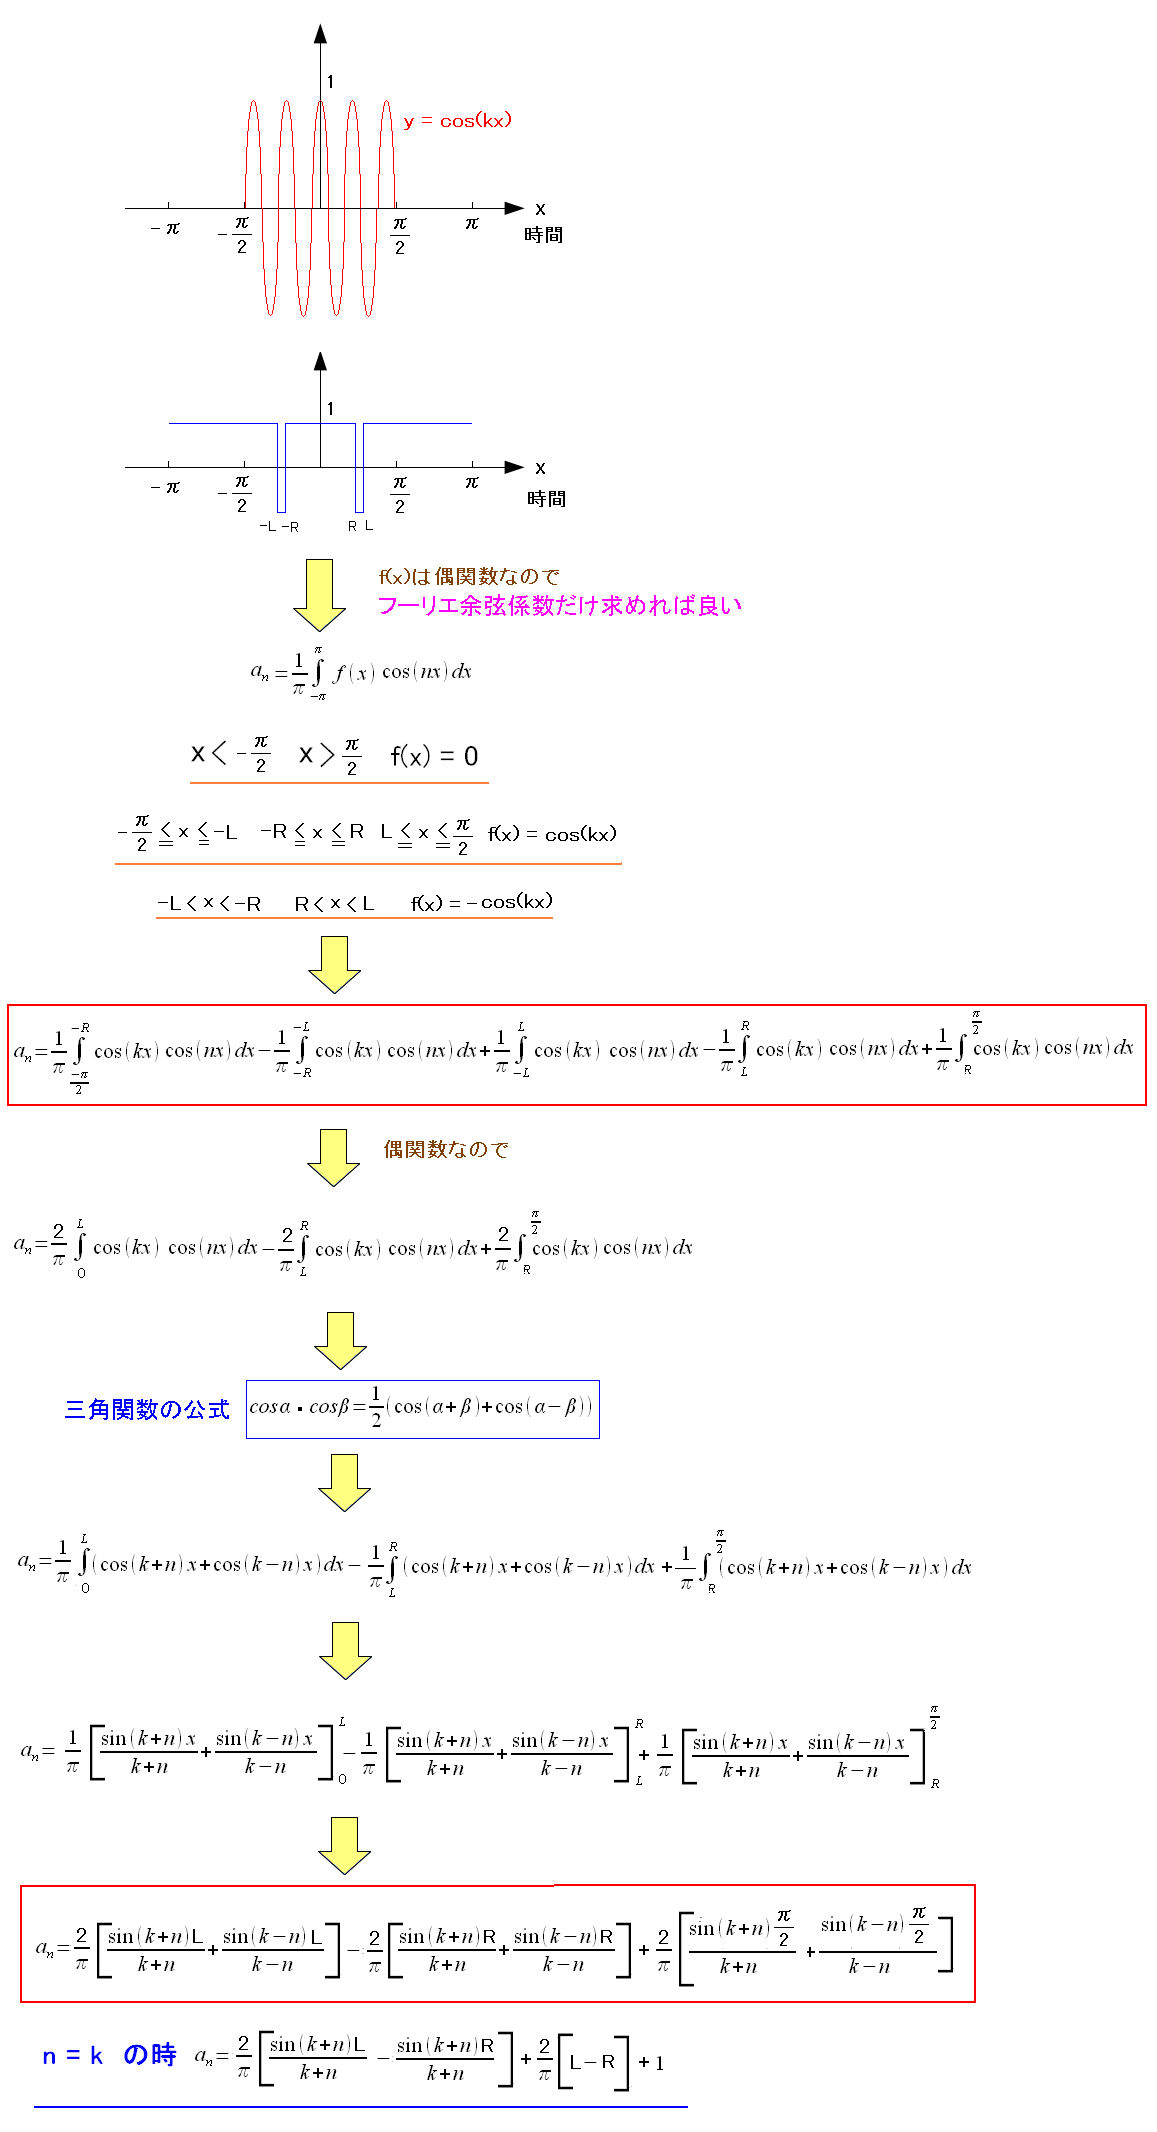 SK変調にPN符号を掛け合わせた場合のフーリエ余弦係数を算出